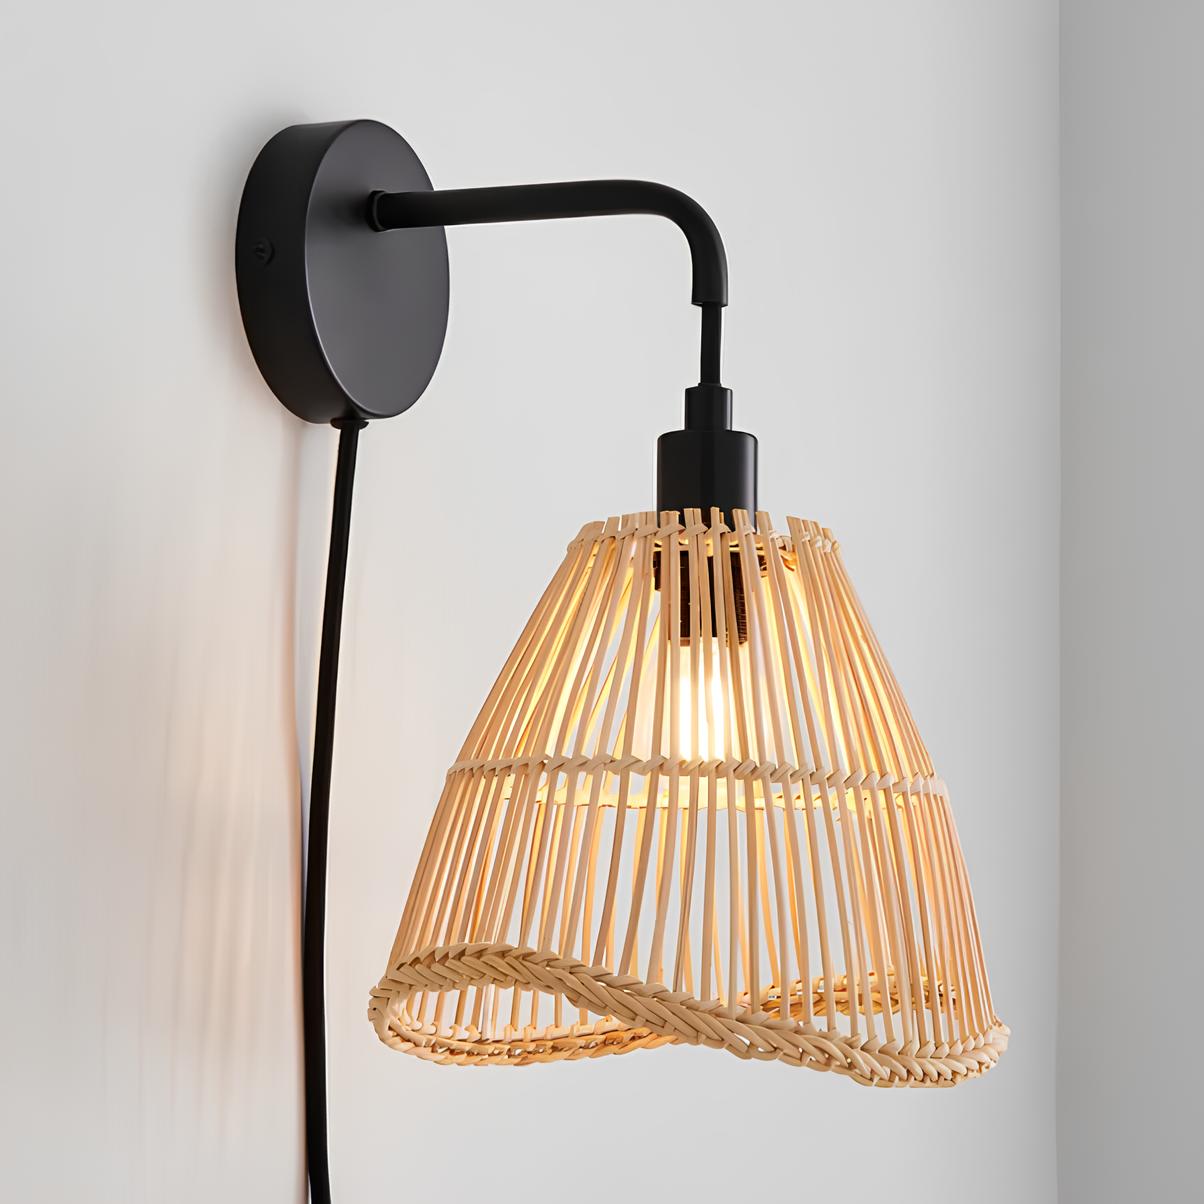 Bamboo Wall lamps For Living Room | Rattan Wall scones | Wicker Wall Lamps | Cane Wall Scones - Krisha - Akway